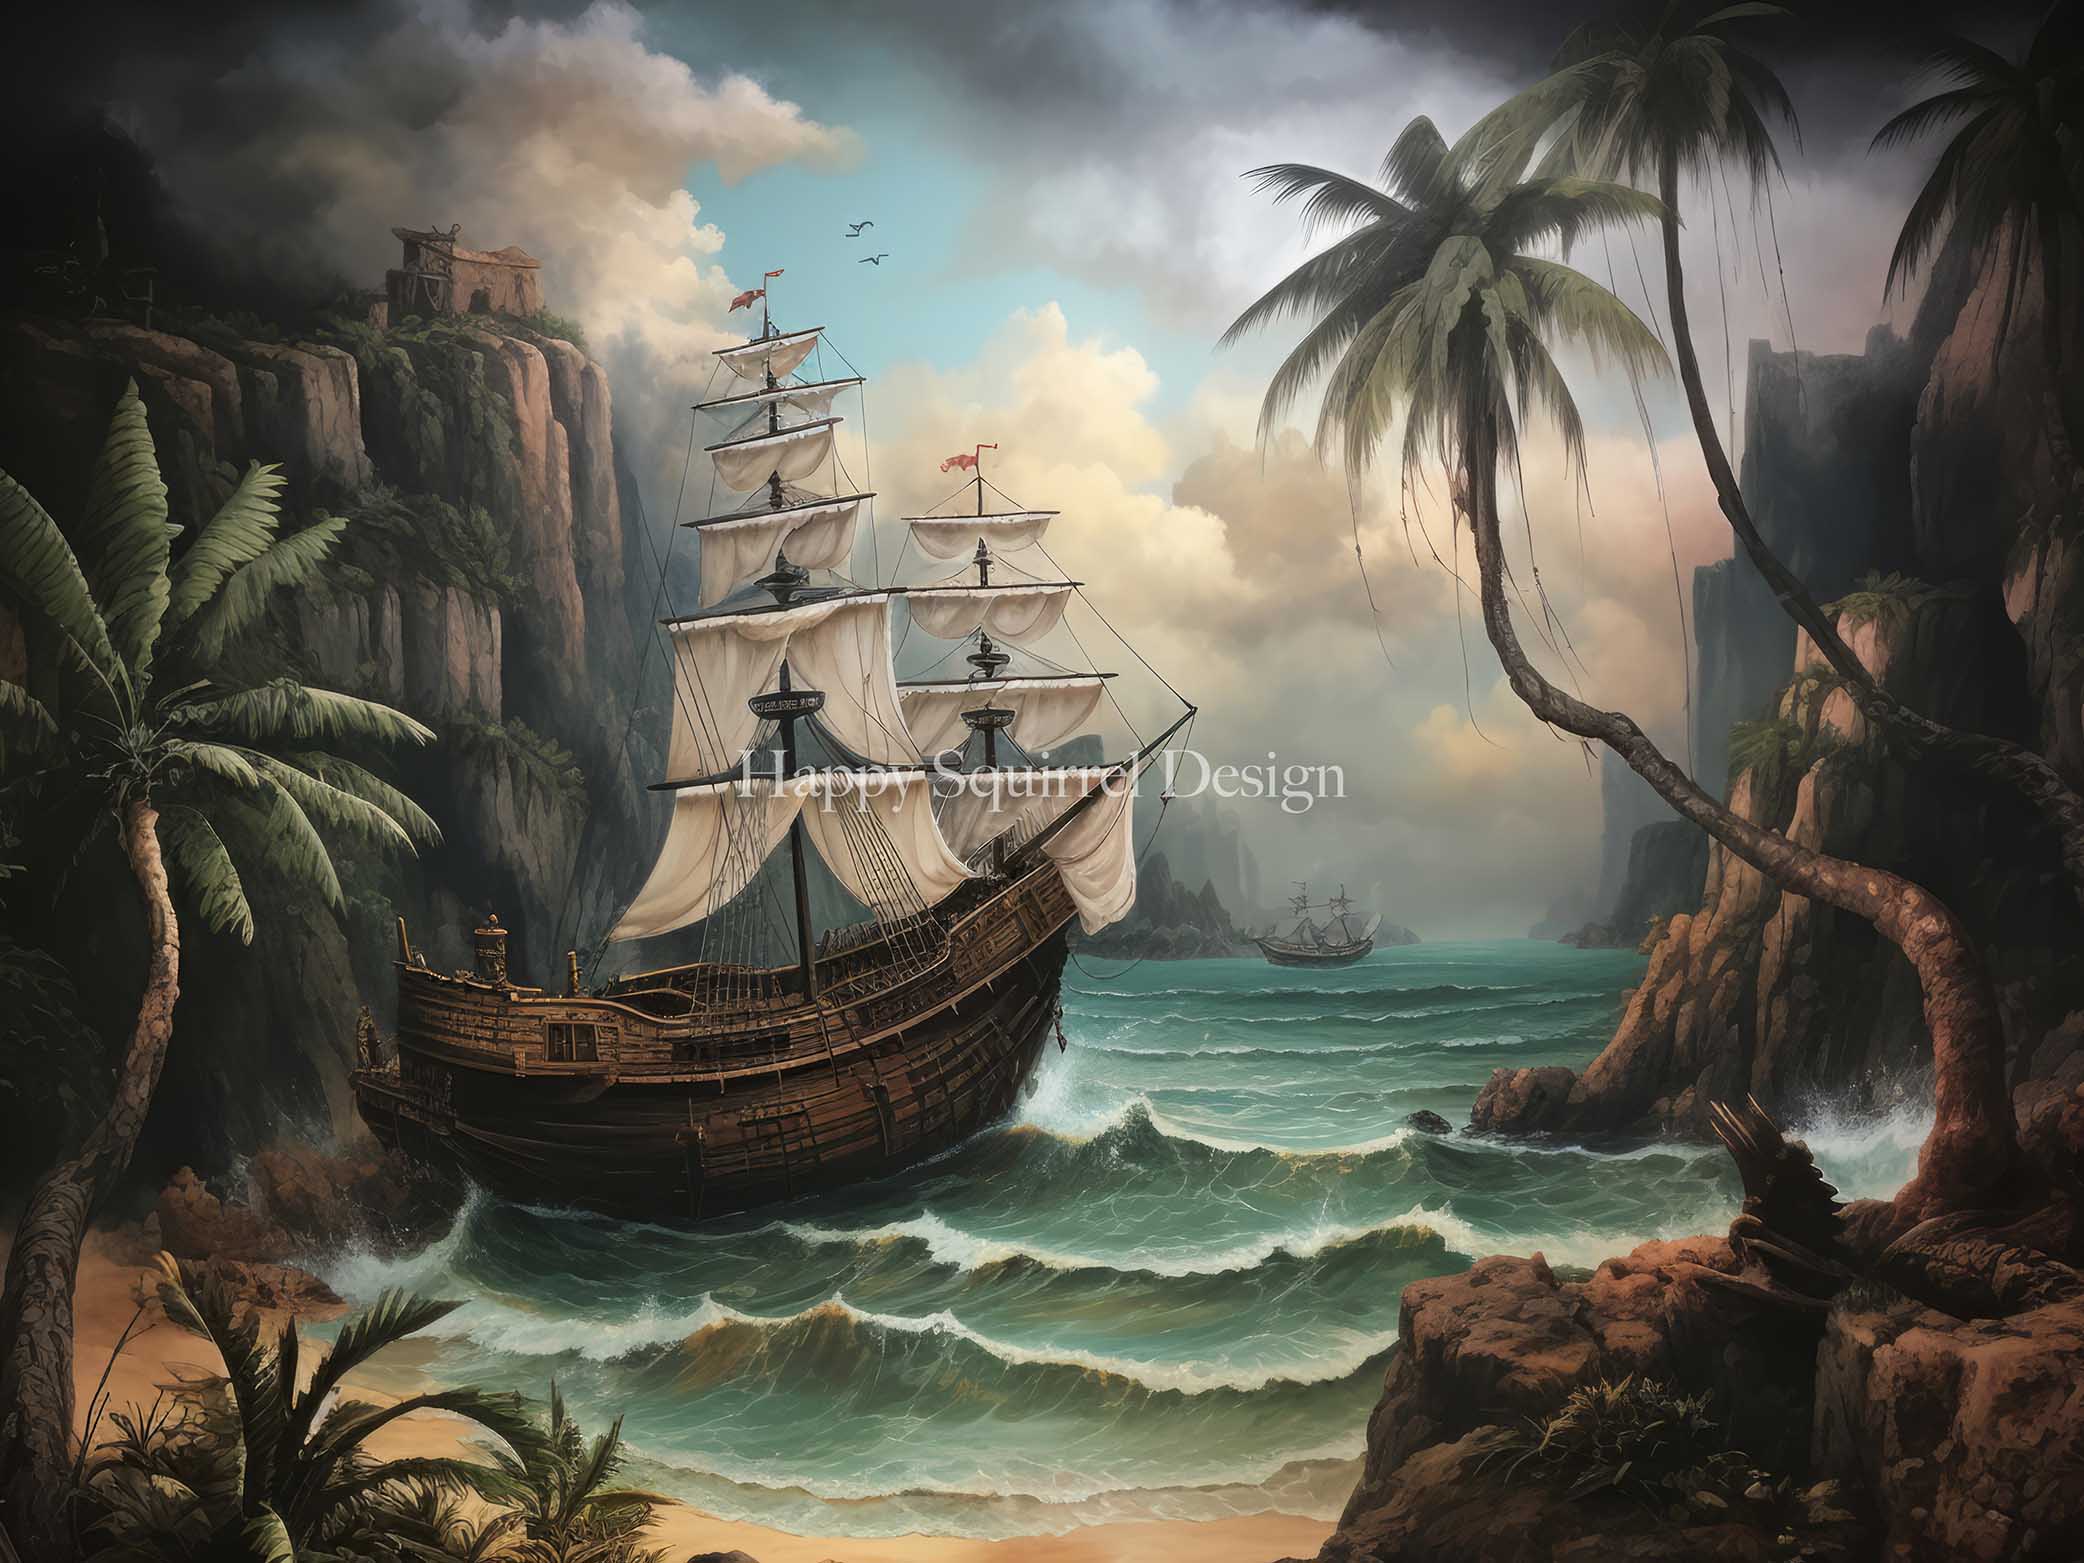 Kate Summer Shipwreck Backdrop Designed by Happy Squirrel Design